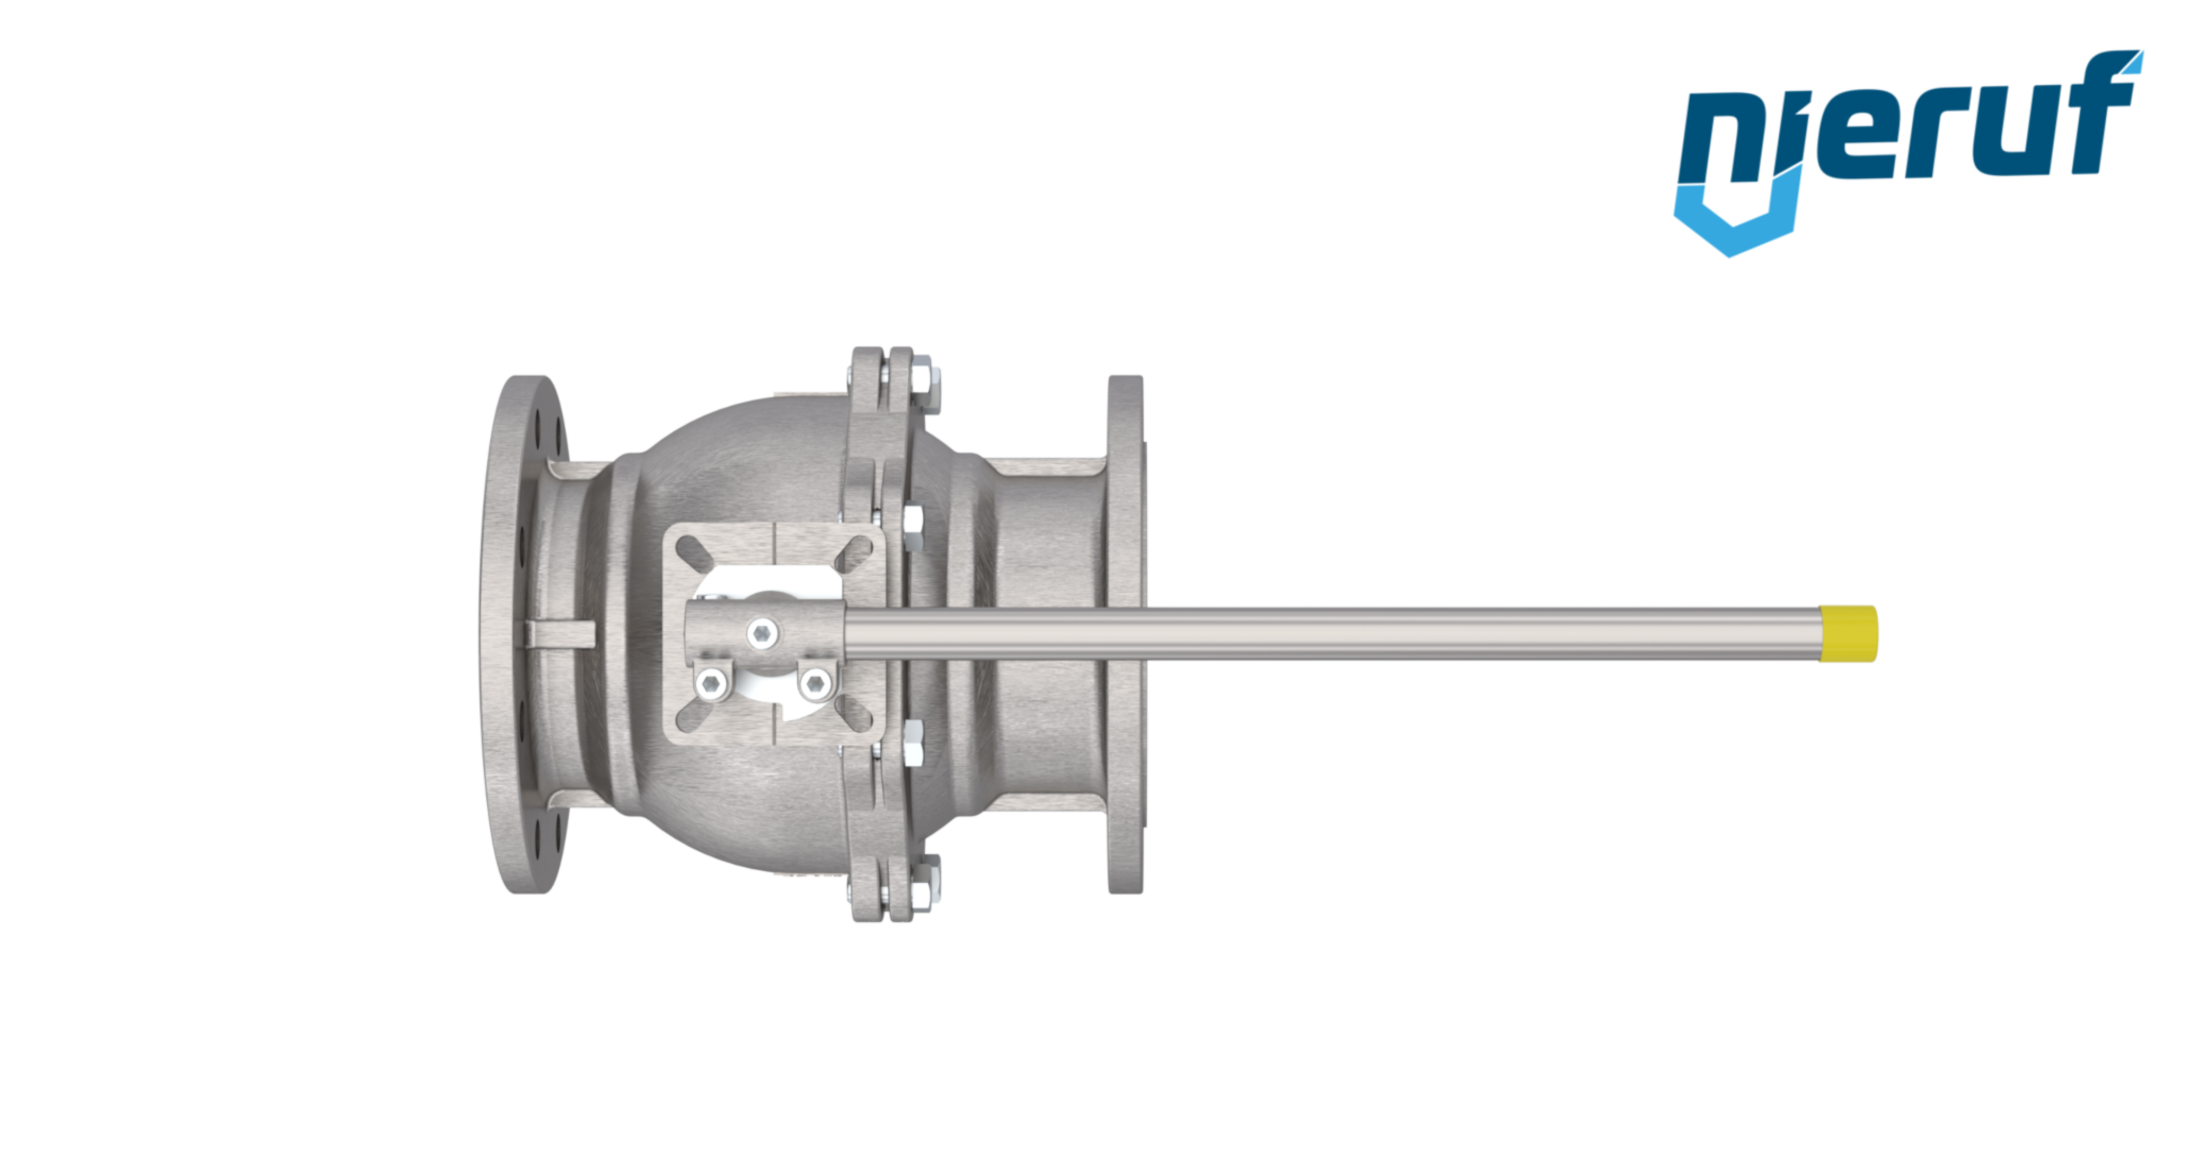 Gas-flange ball valve DN125 FK05 stainless steel 1.4408